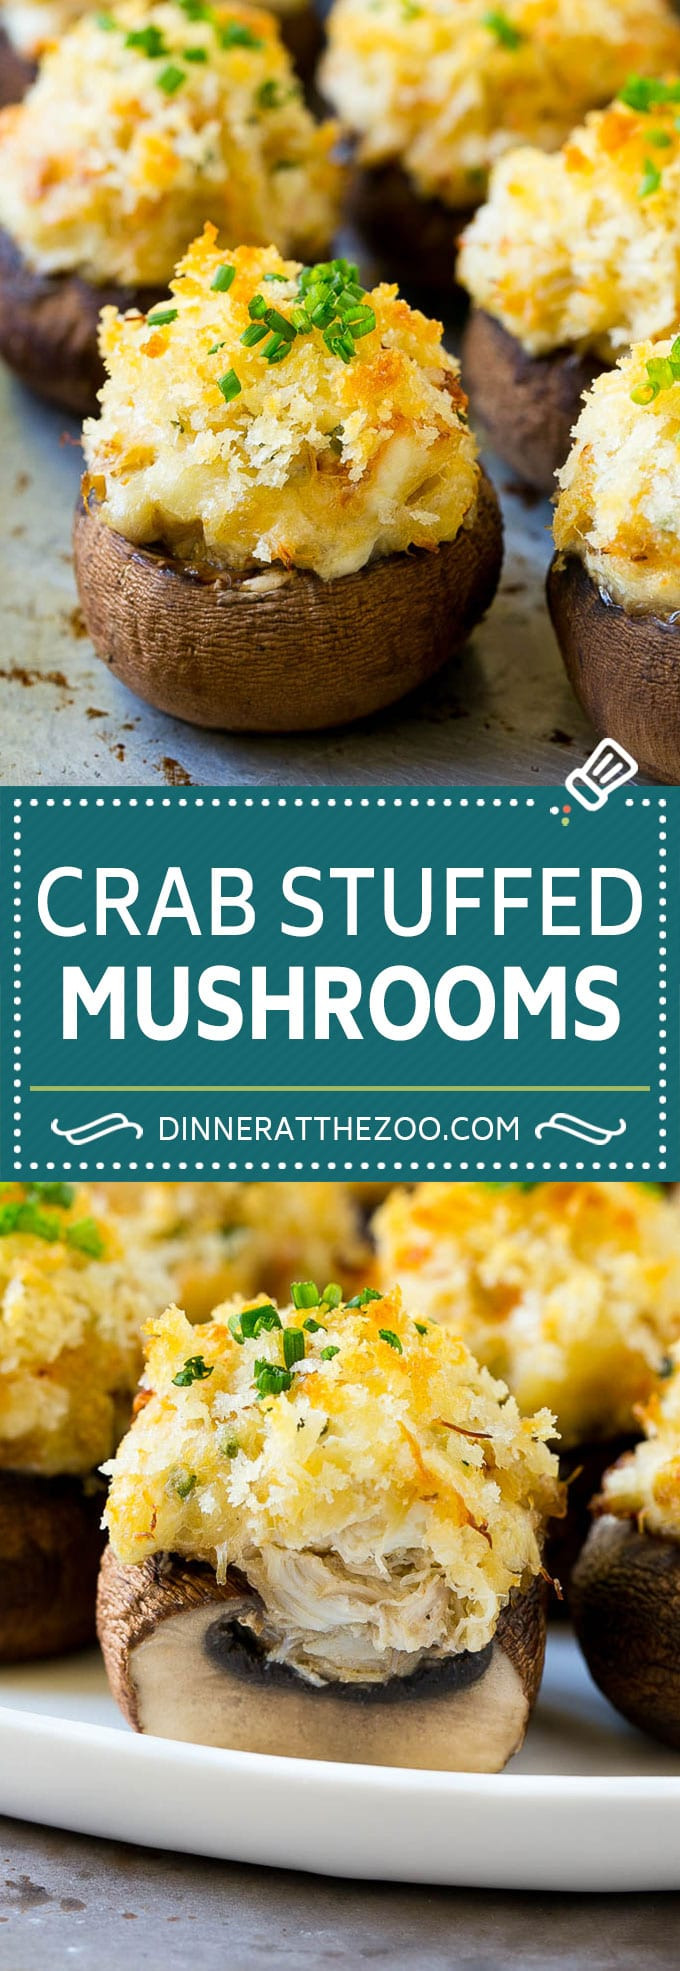 Crab Stuffed Mushroom Recipe
 Crab Stuffed Mushrooms Dinner at the Zoo